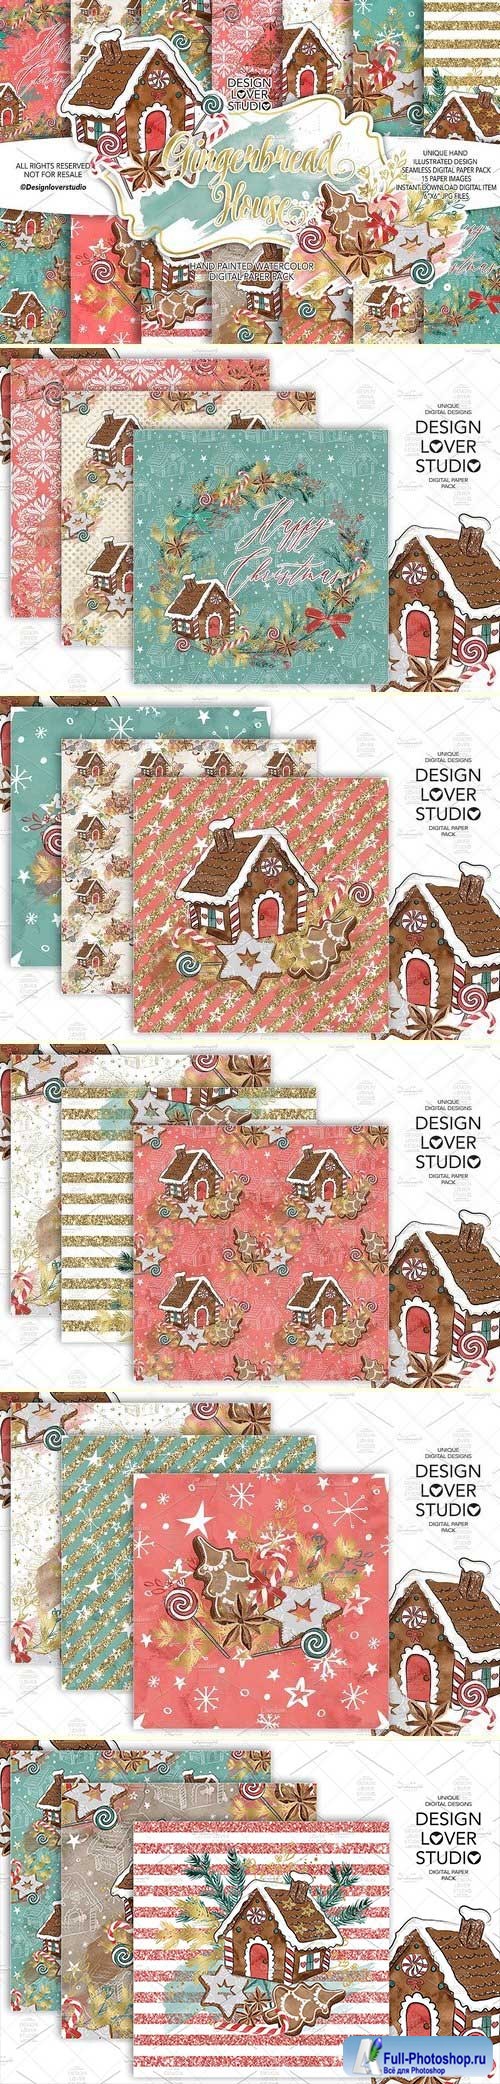 CM - Gingerbread house digital paper pack 2940045